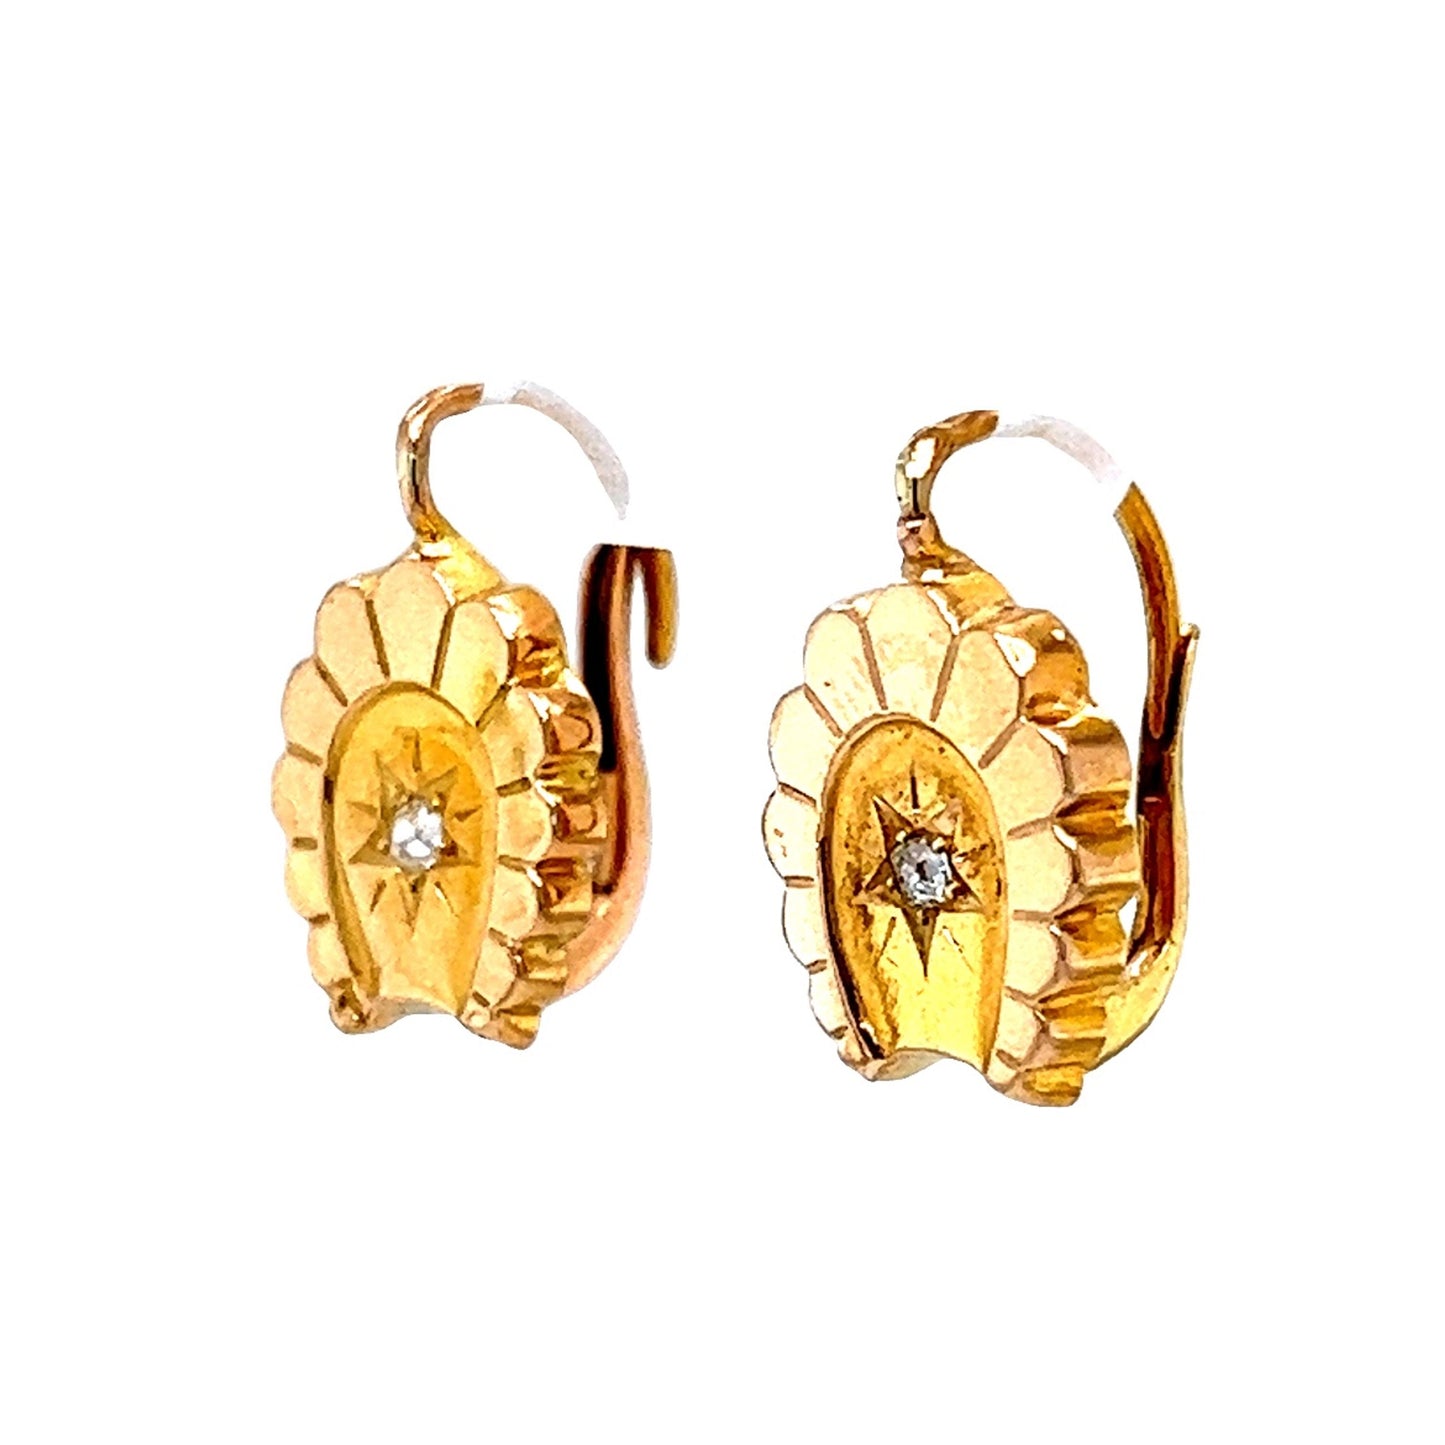 Victorian Inspired Diamond Drop Earrings in 14k Yellow Gold